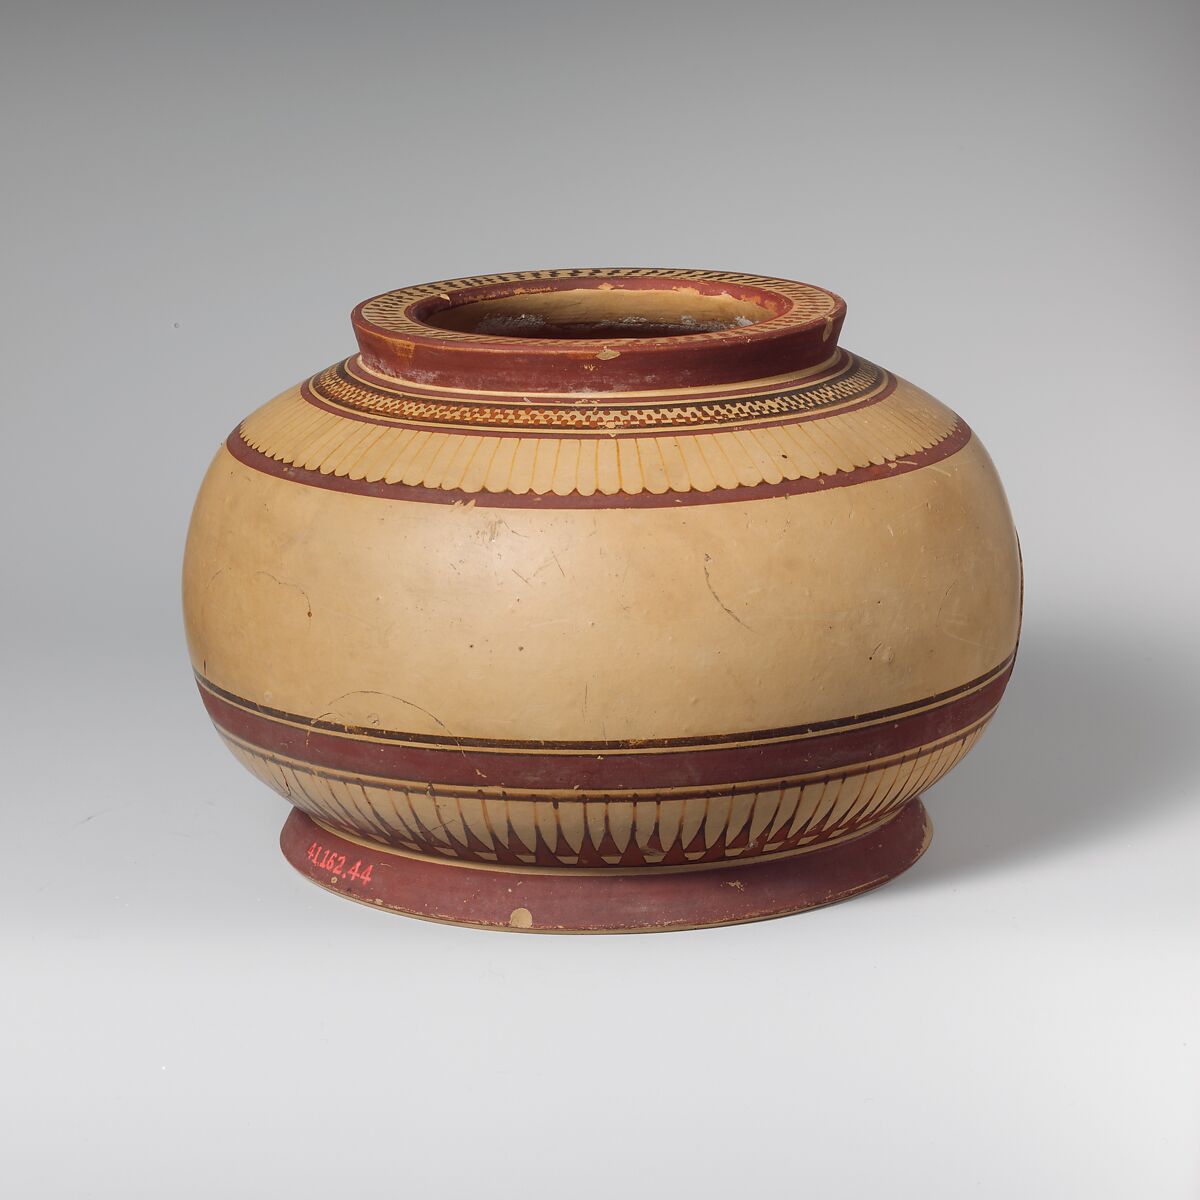 Terracotta pyxis (box), Terracotta, Greek, Corinthian 